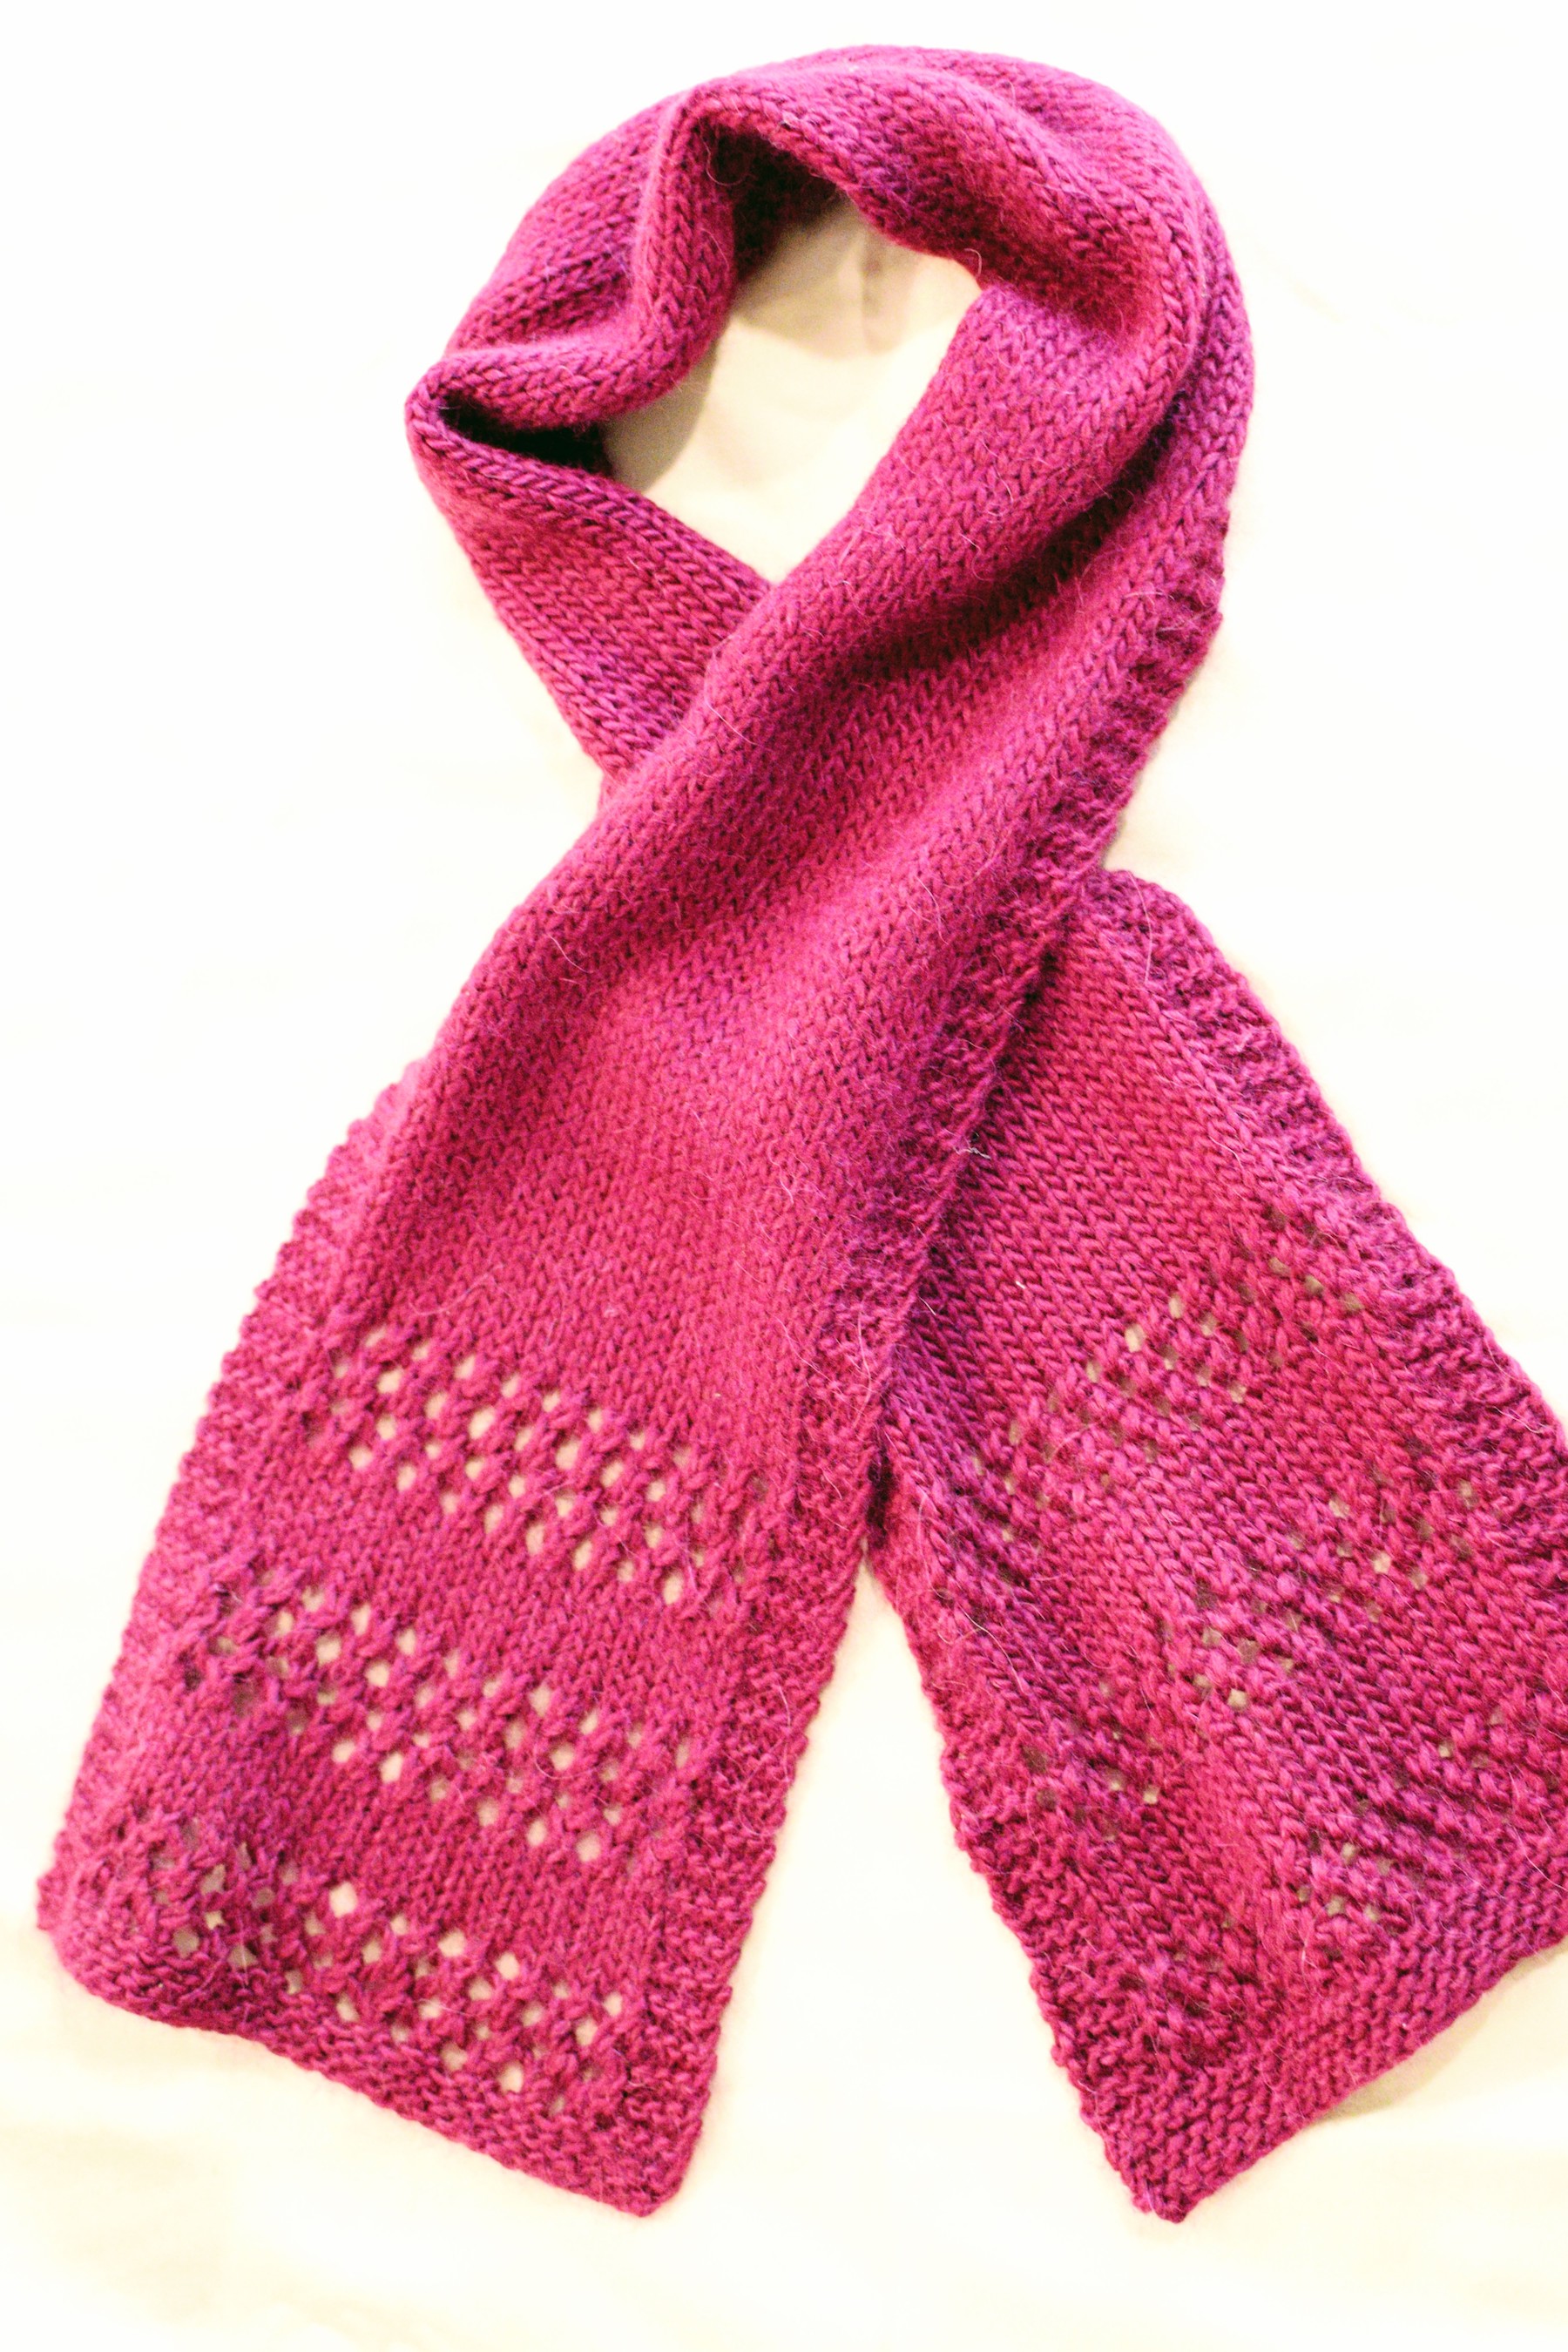 131ft Knitting Set For Making Eyelash Yarn Scarf | Yarn Balls 2 Knitting Needles | Guaranteed | Great Gift Idea 3 Scarf Knitting Kit 